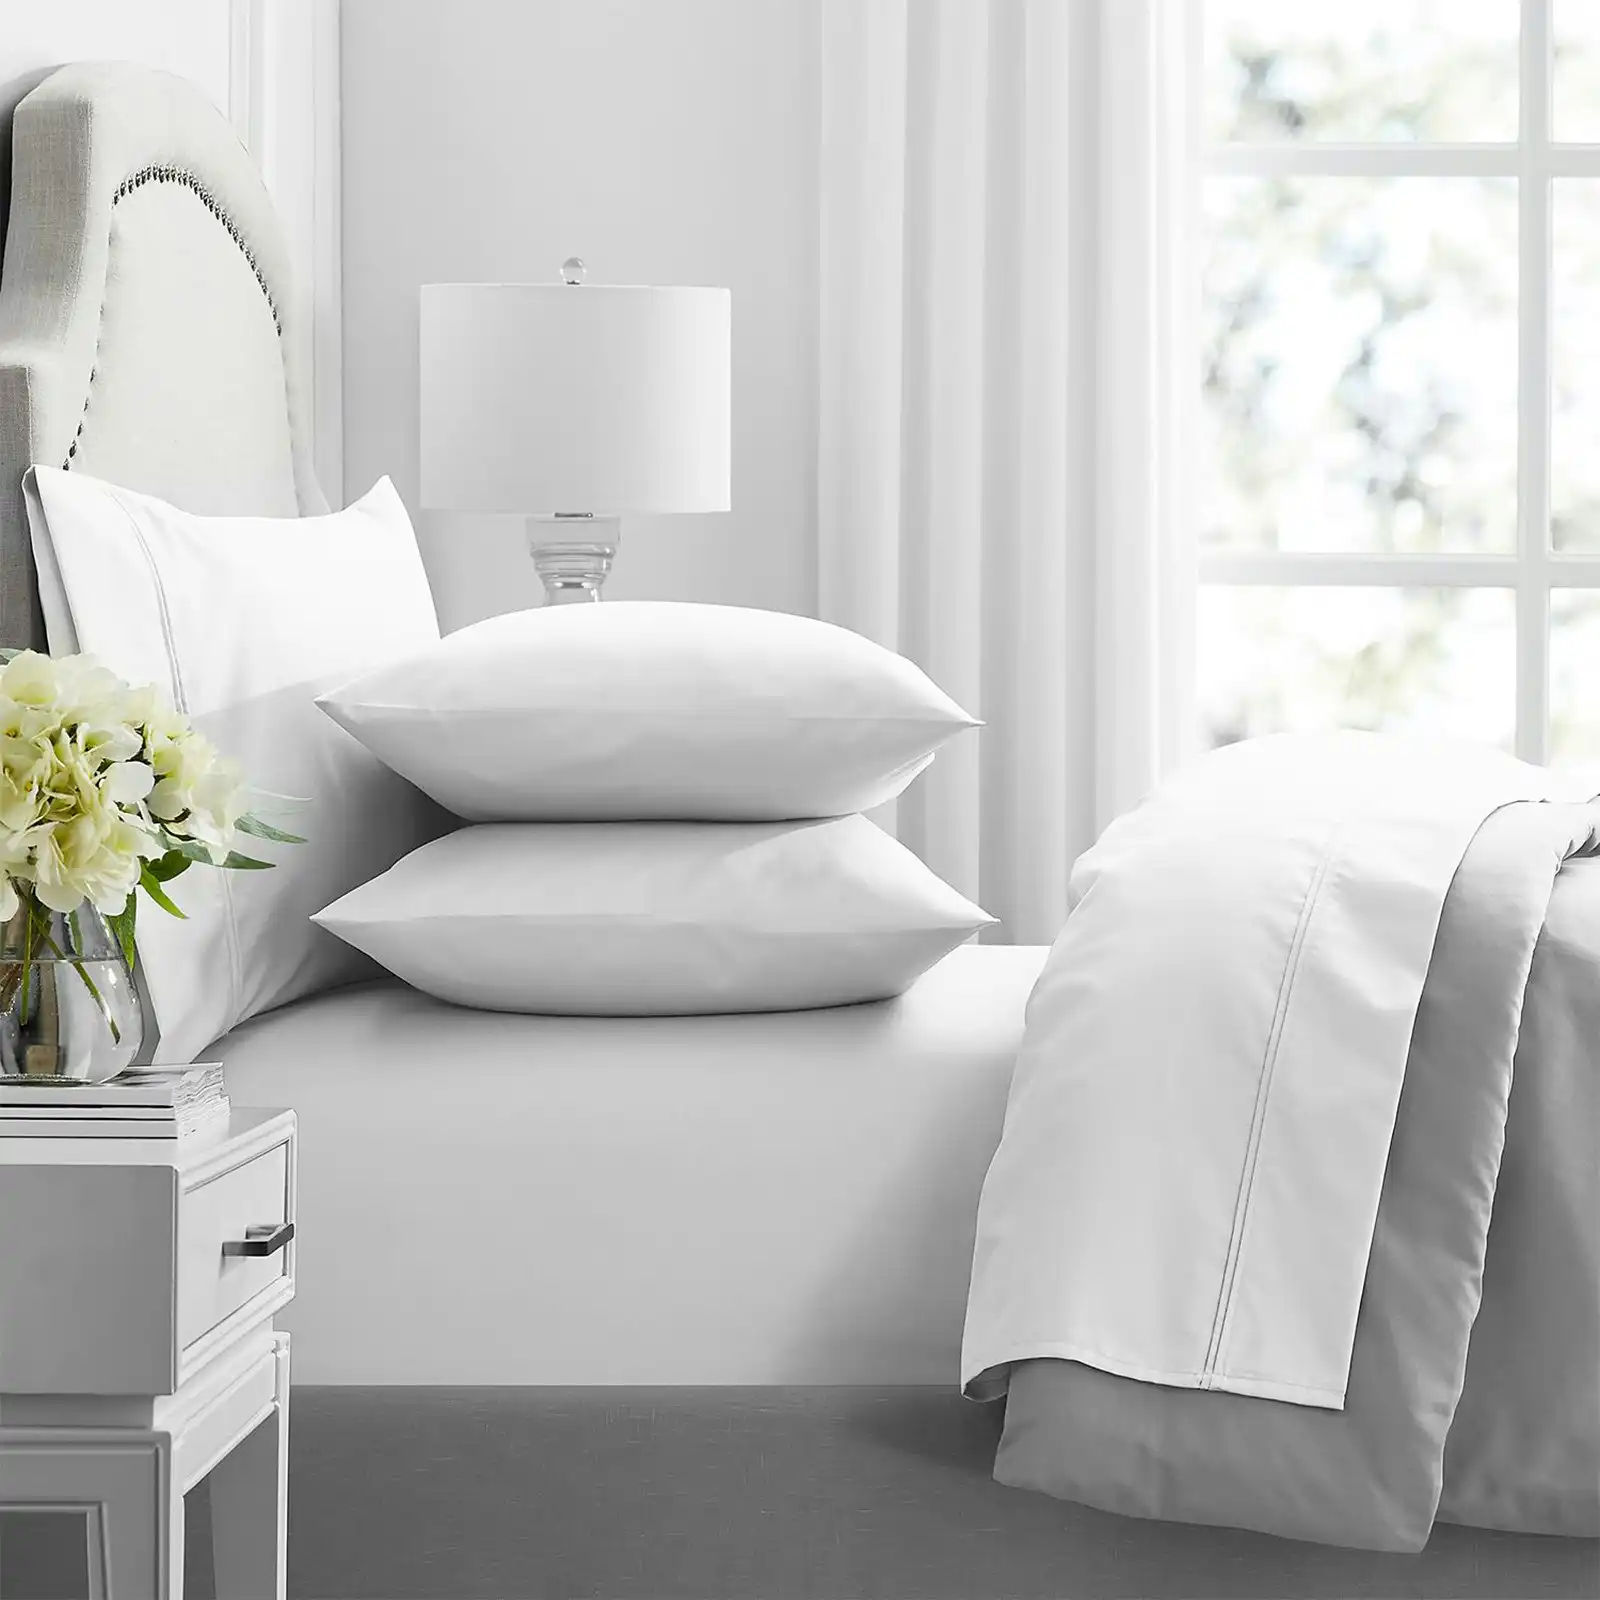 Renee Taylor Mega King Bed Sheet Premium 1000TC  Egyptian Cotton Bedding White